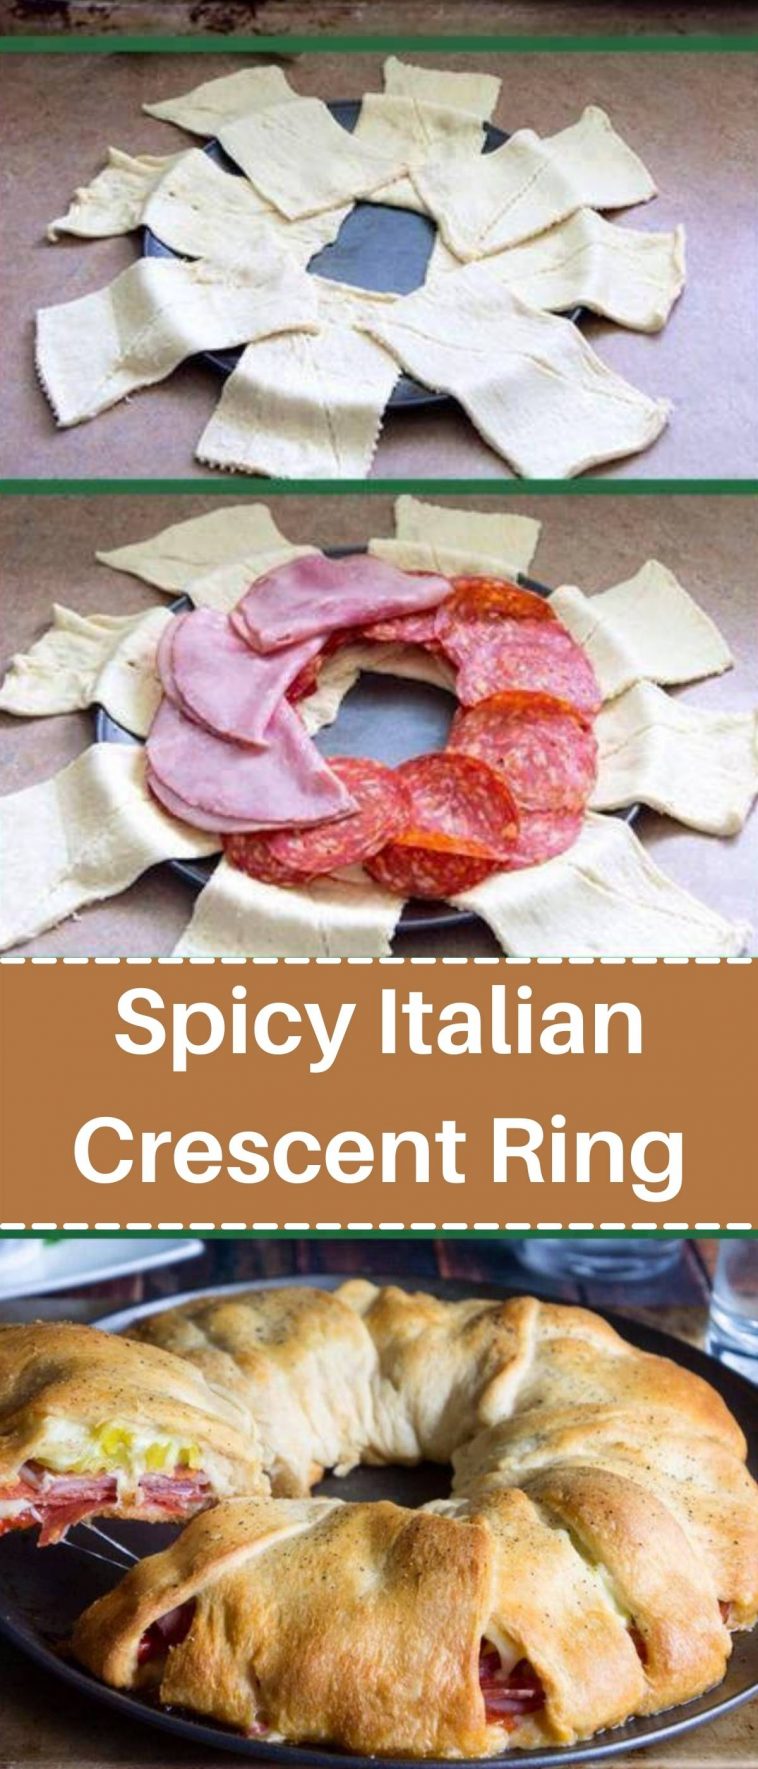 Spicy Italian Crescent Ring